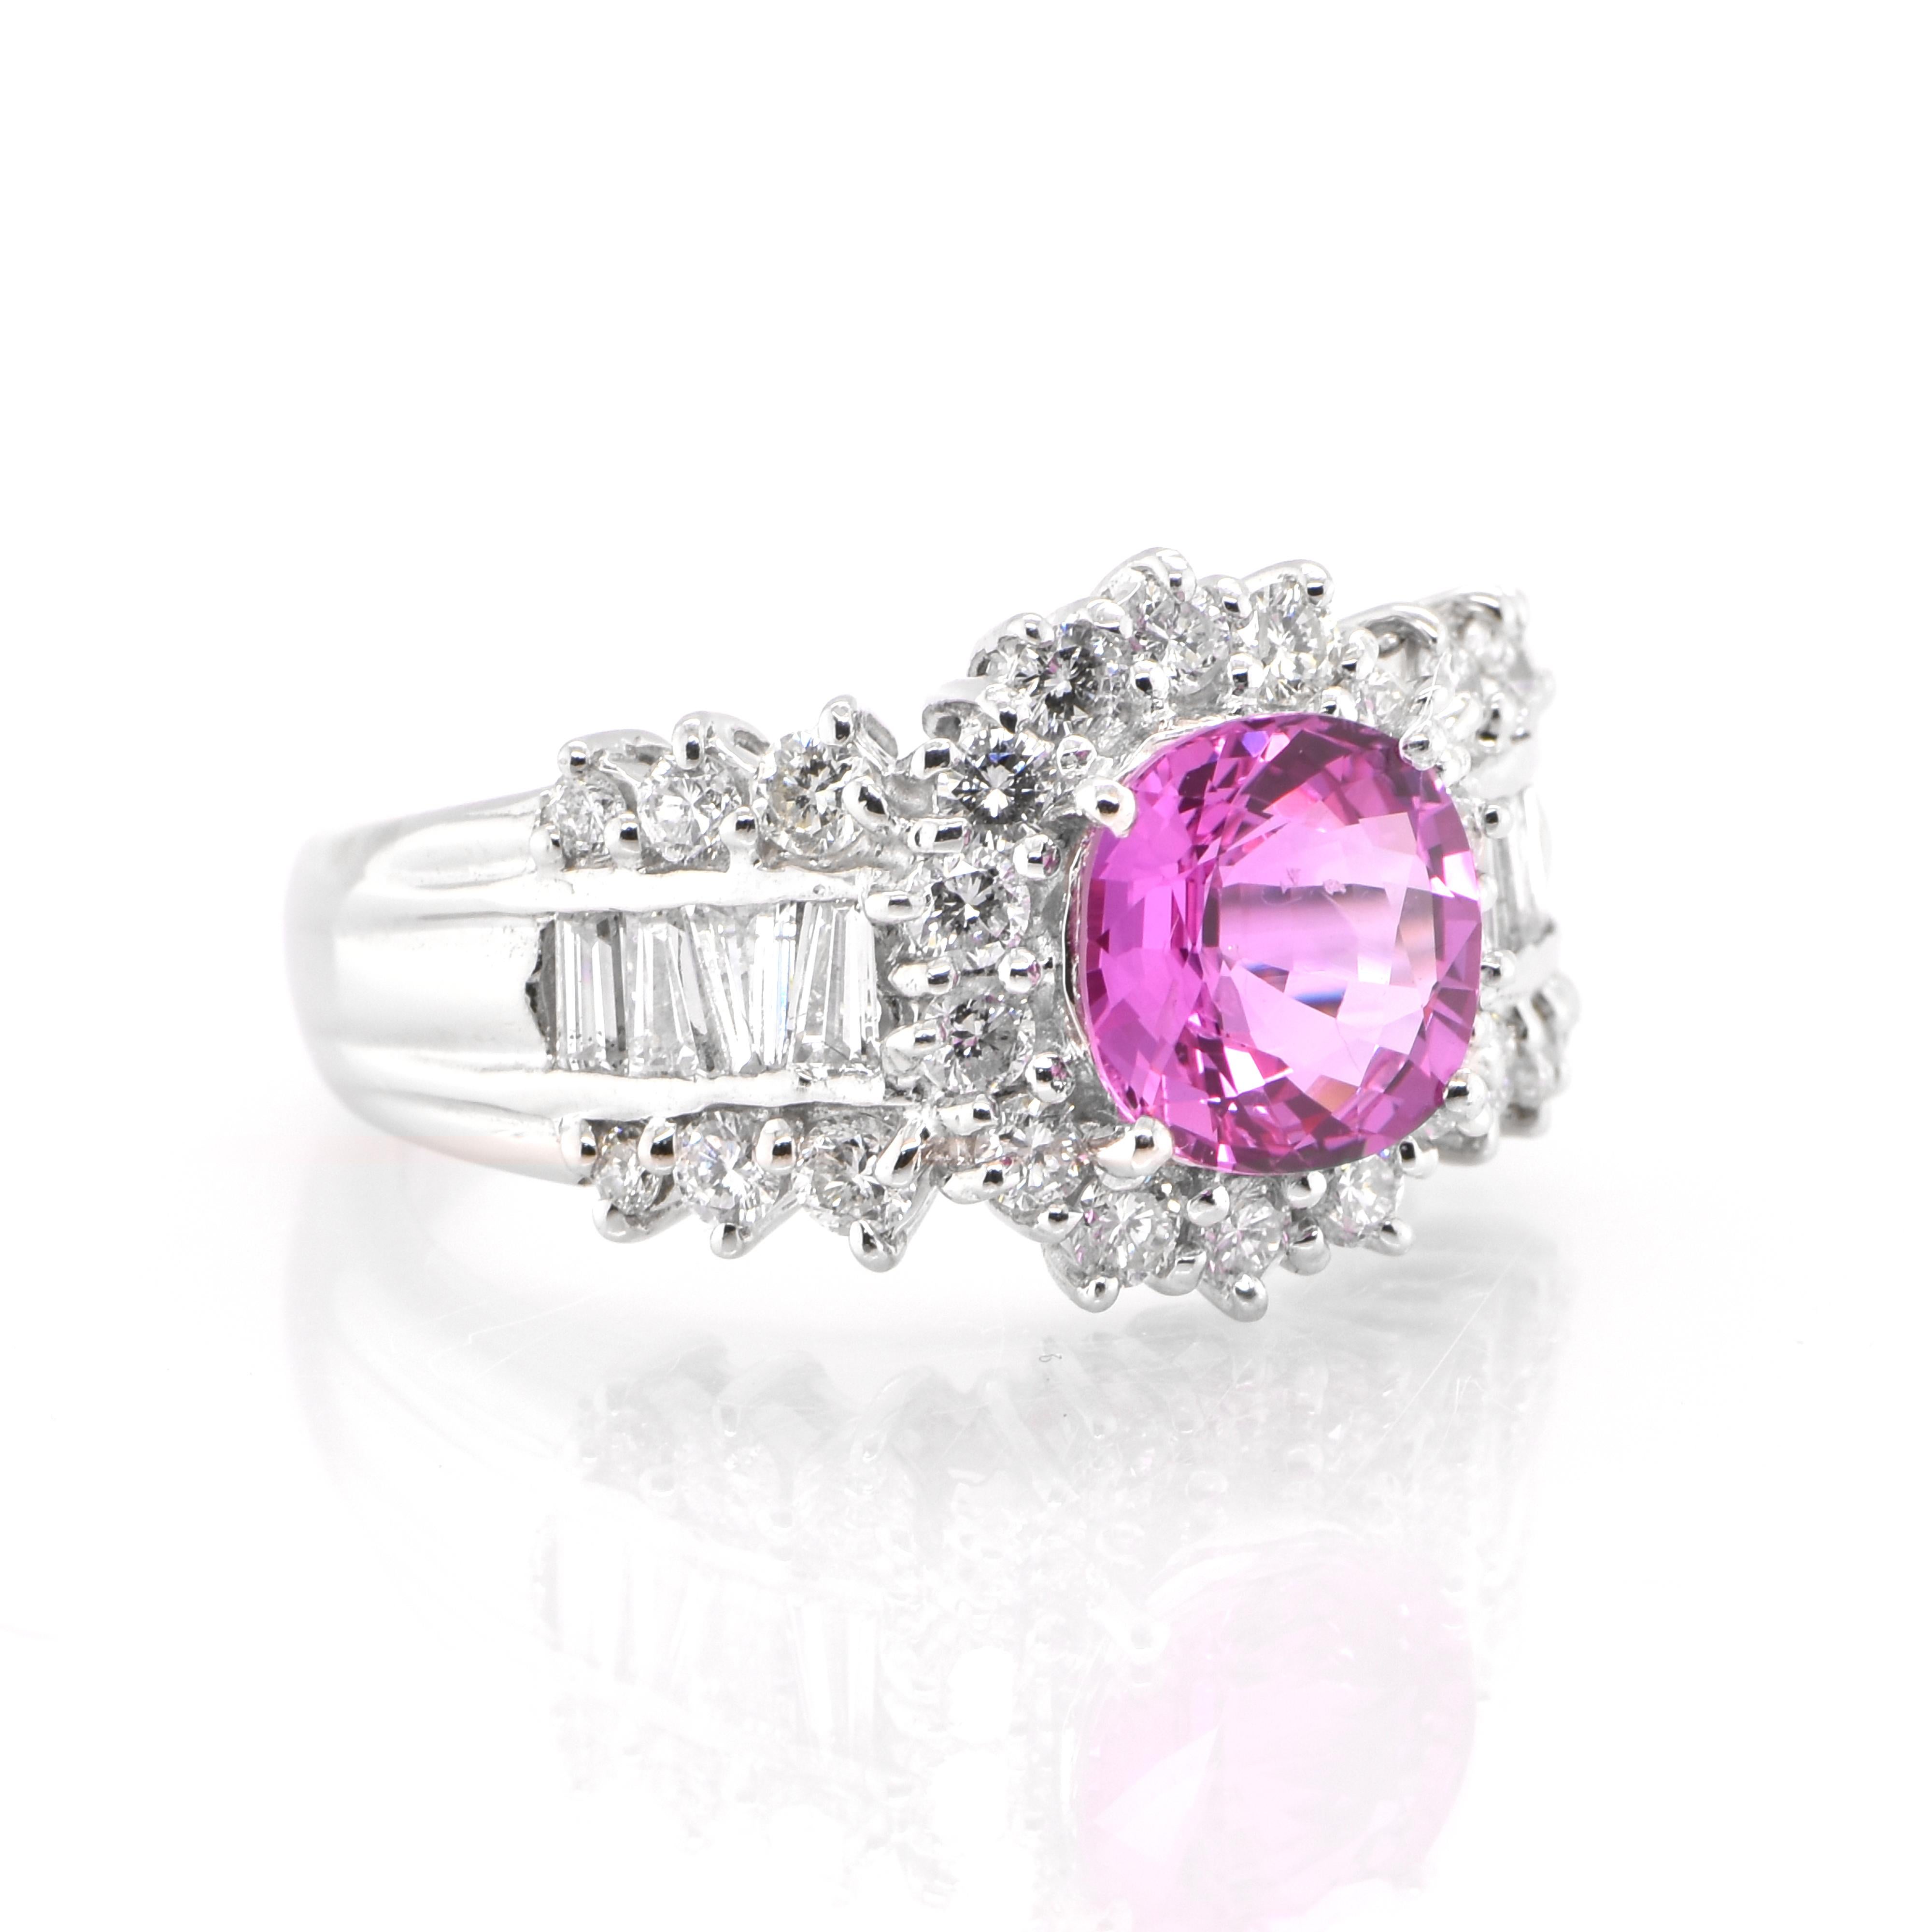 Modern 2.05 Carat, Natural Pink Sapphire and Diamond Ring Set in Platinum